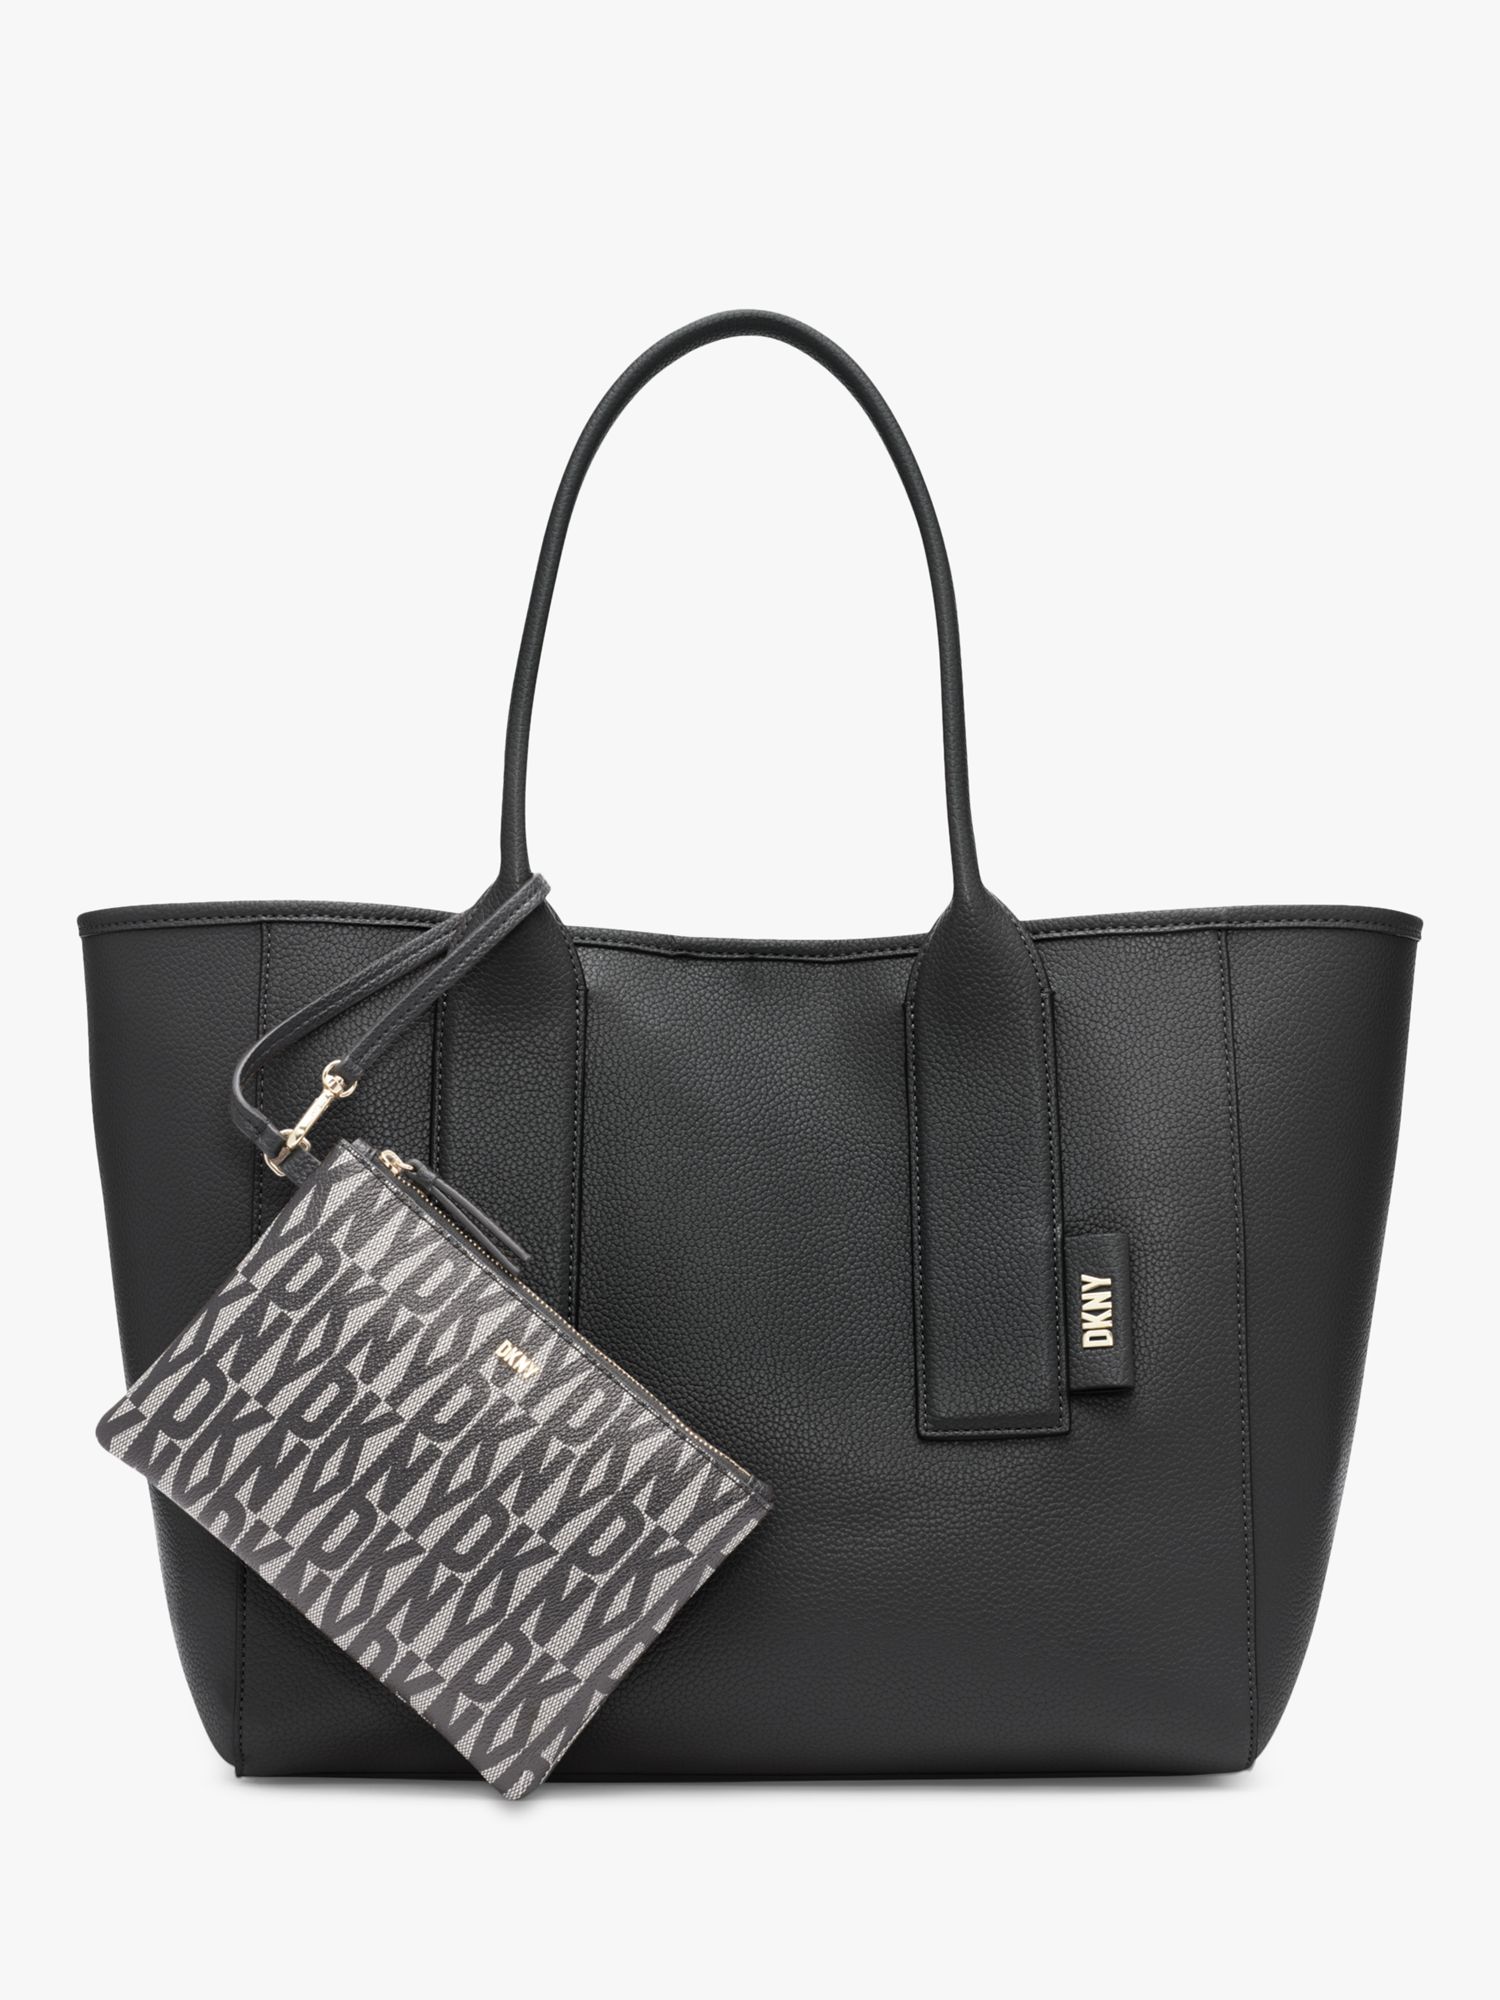 DKNY Grayson Tote Bag, Black/Gold at John Lewis & Partners